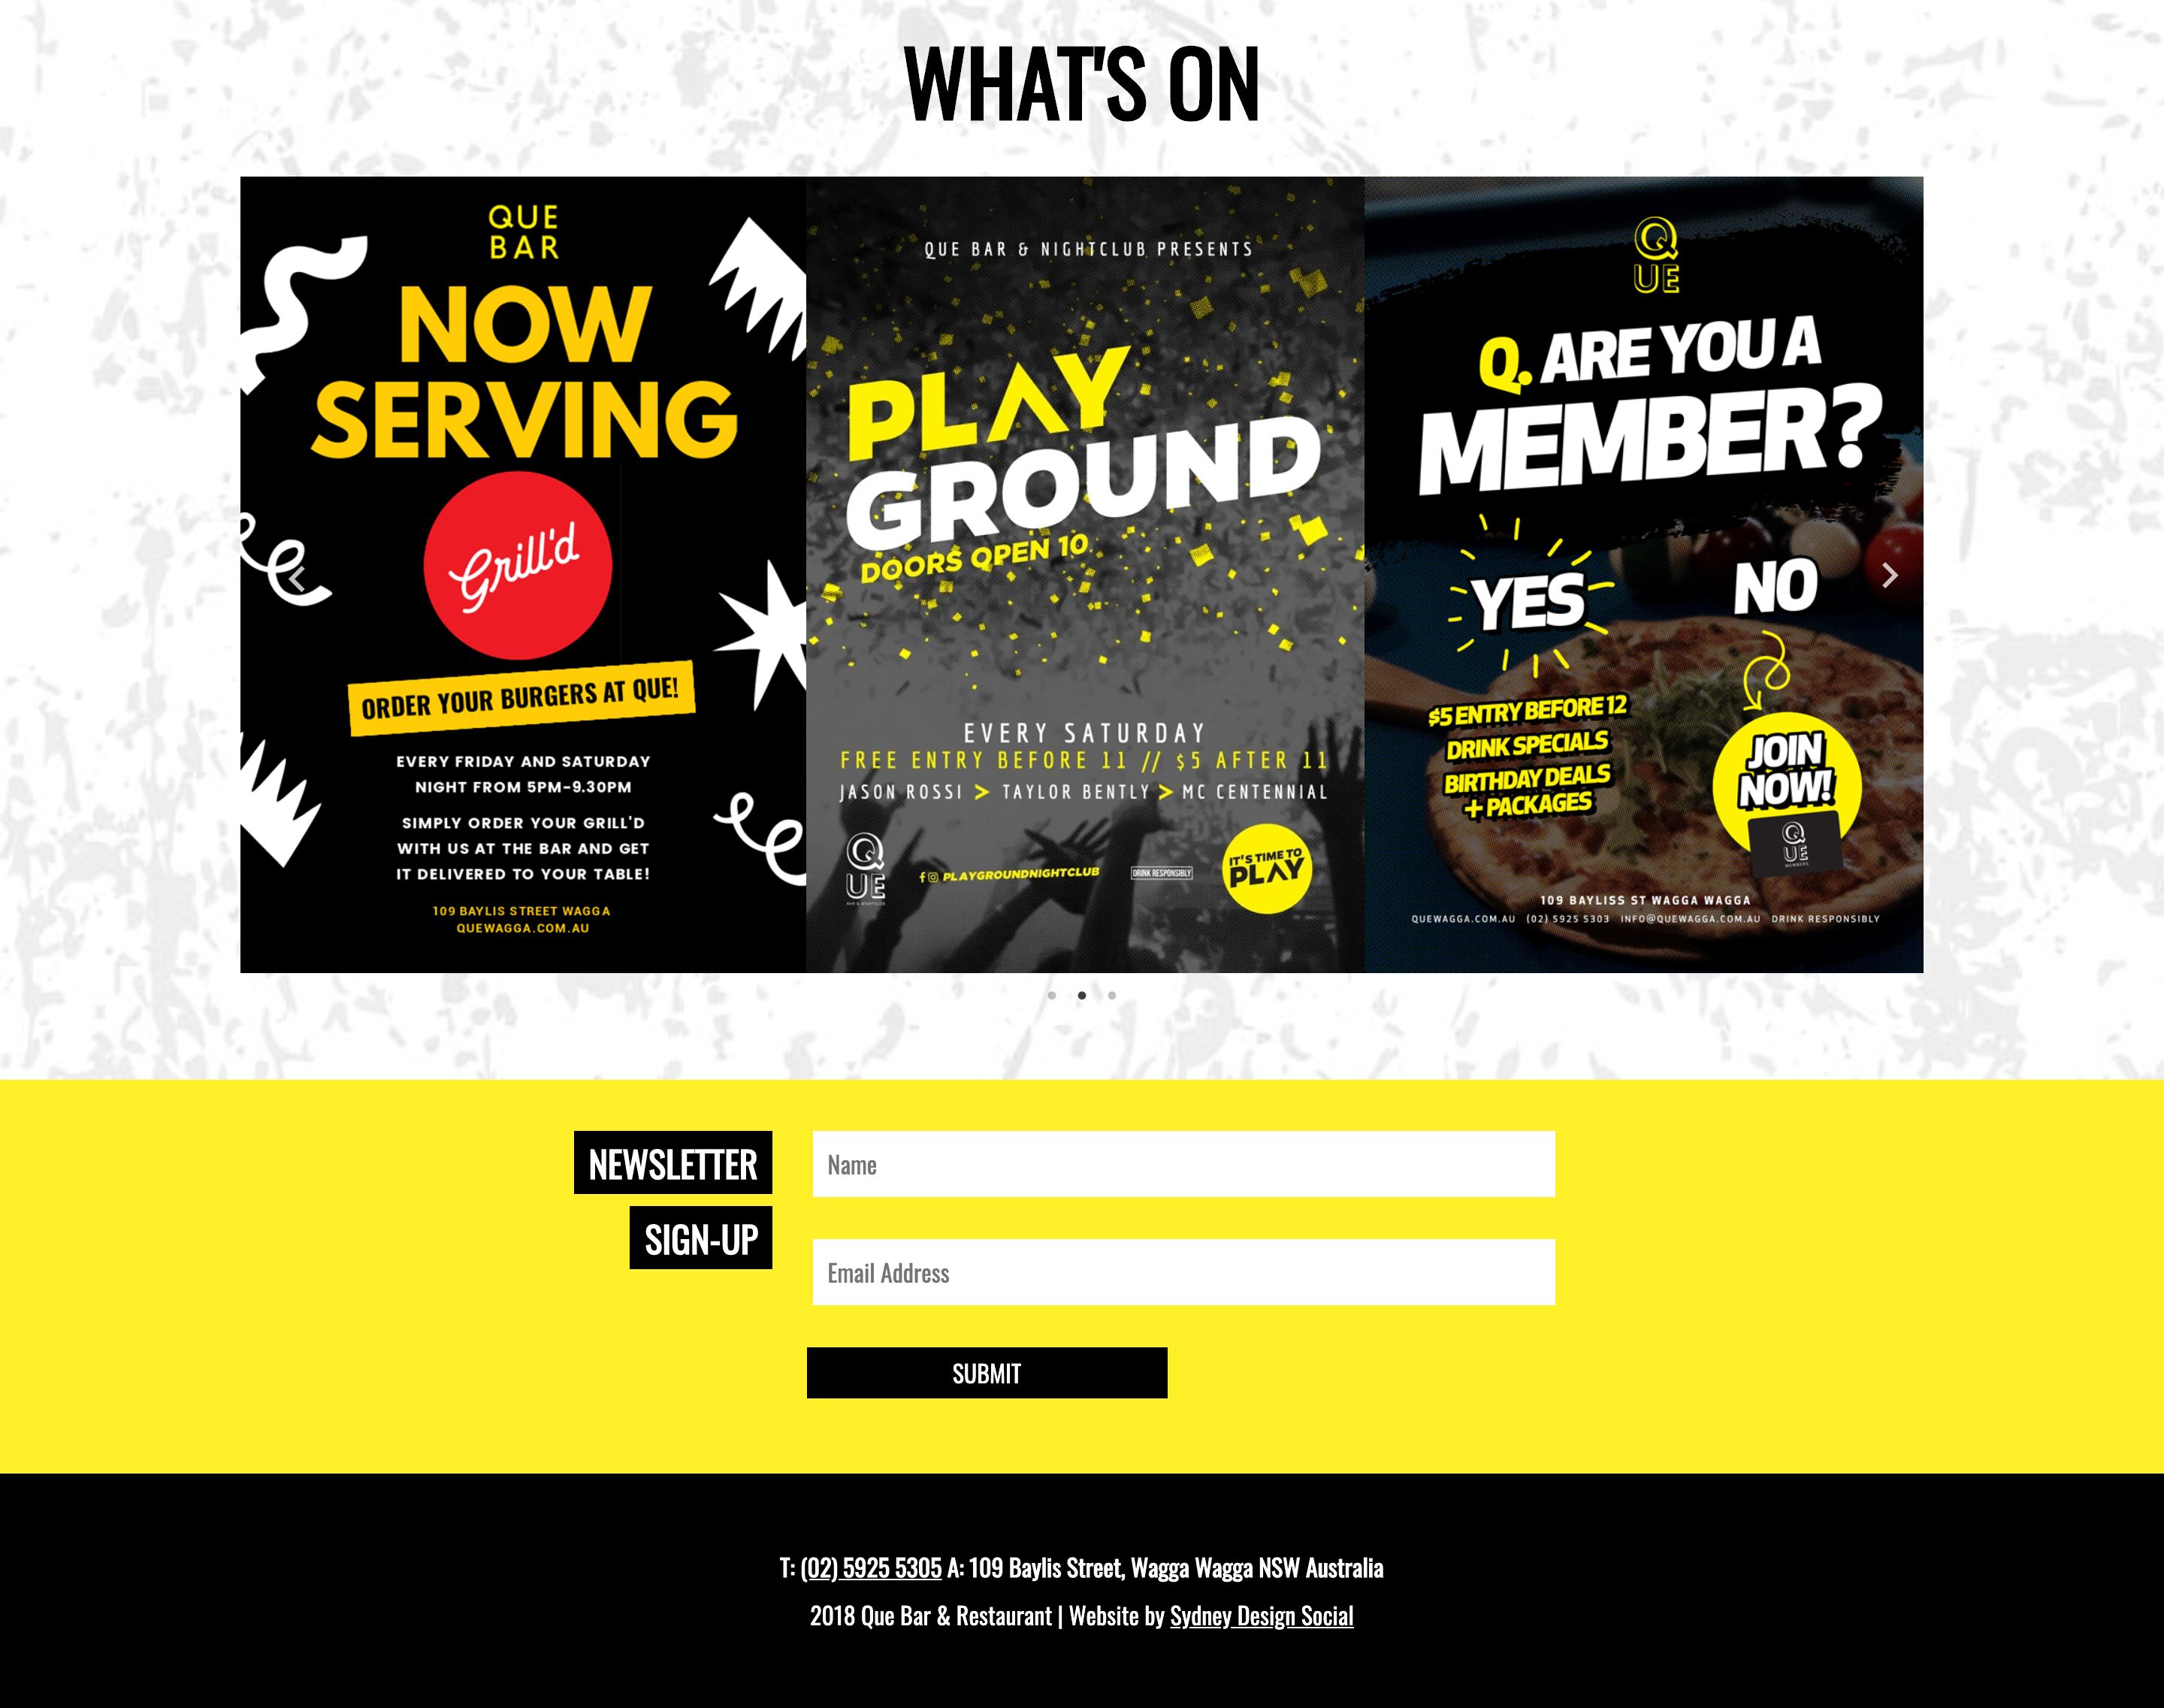 Sydney Design Social's Web Design for Que Bar